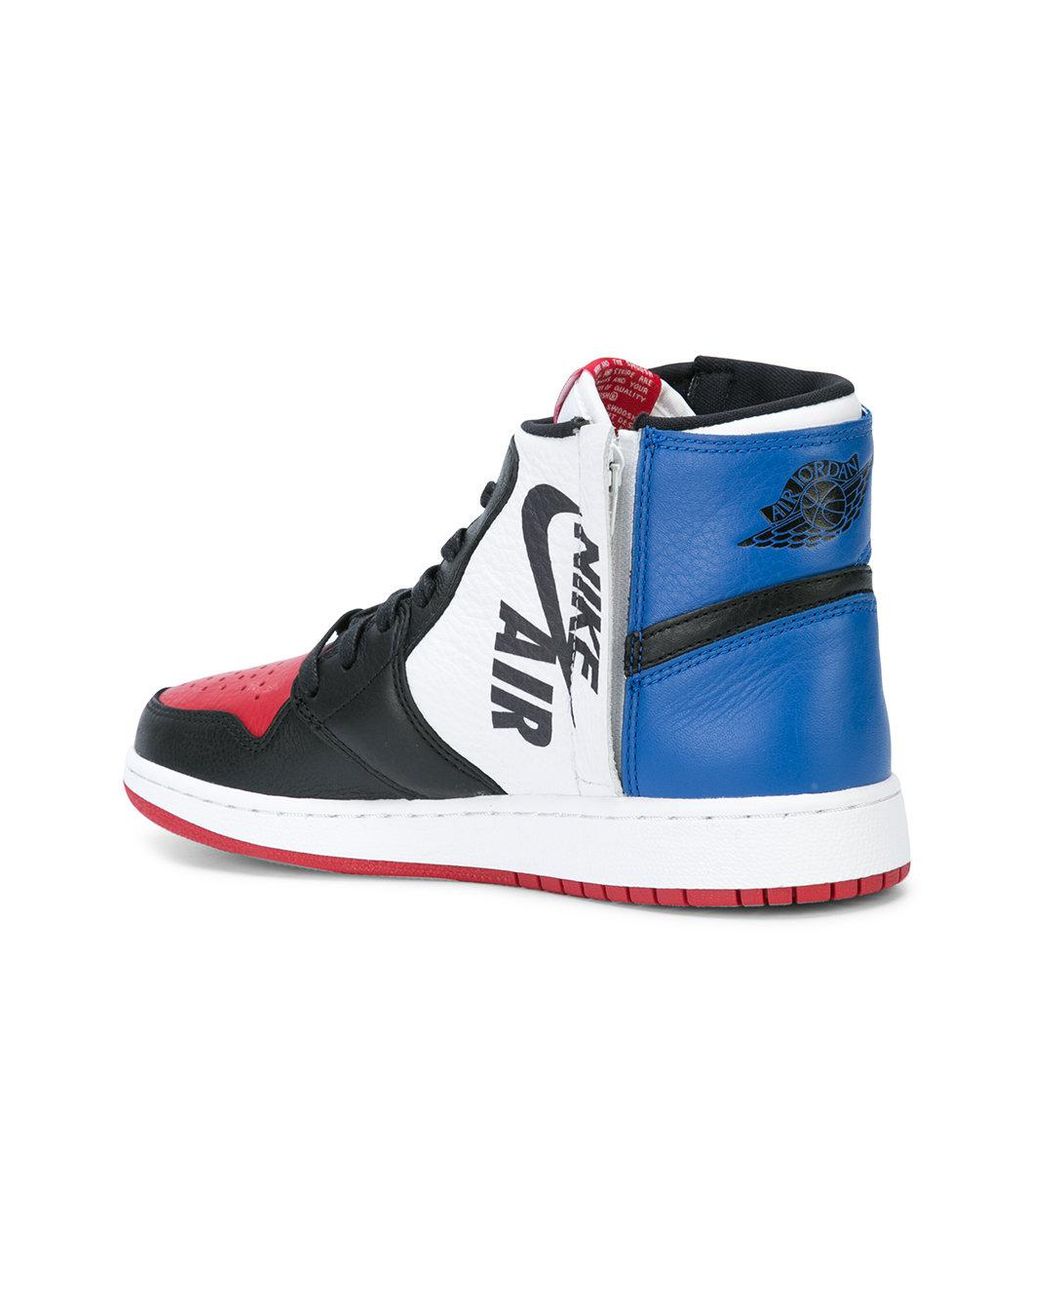 Nike Air Jordan 1 Rebel Xx Sneakers in 